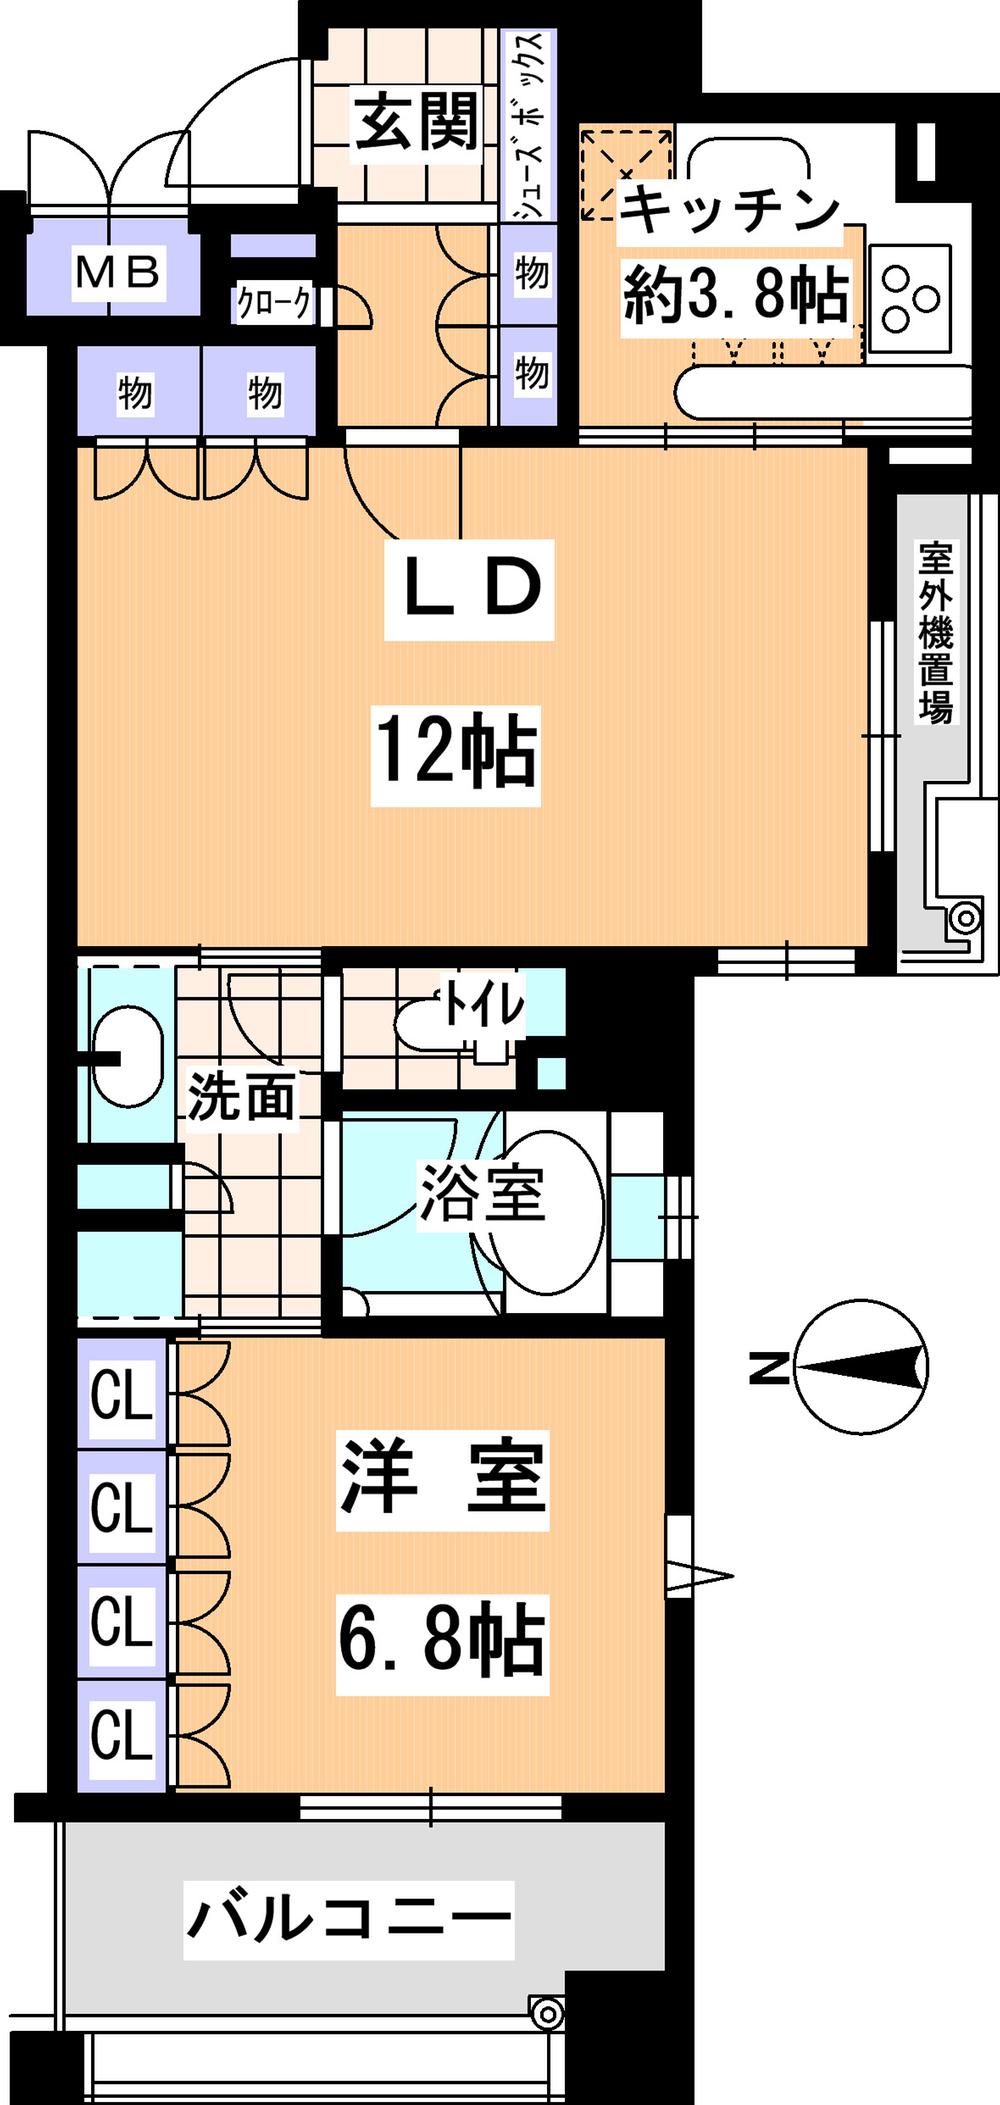 Floor plan. 1LDK, Price 38 million yen, Occupied area 58.14 sq m , Balcony area 7.98 sq m